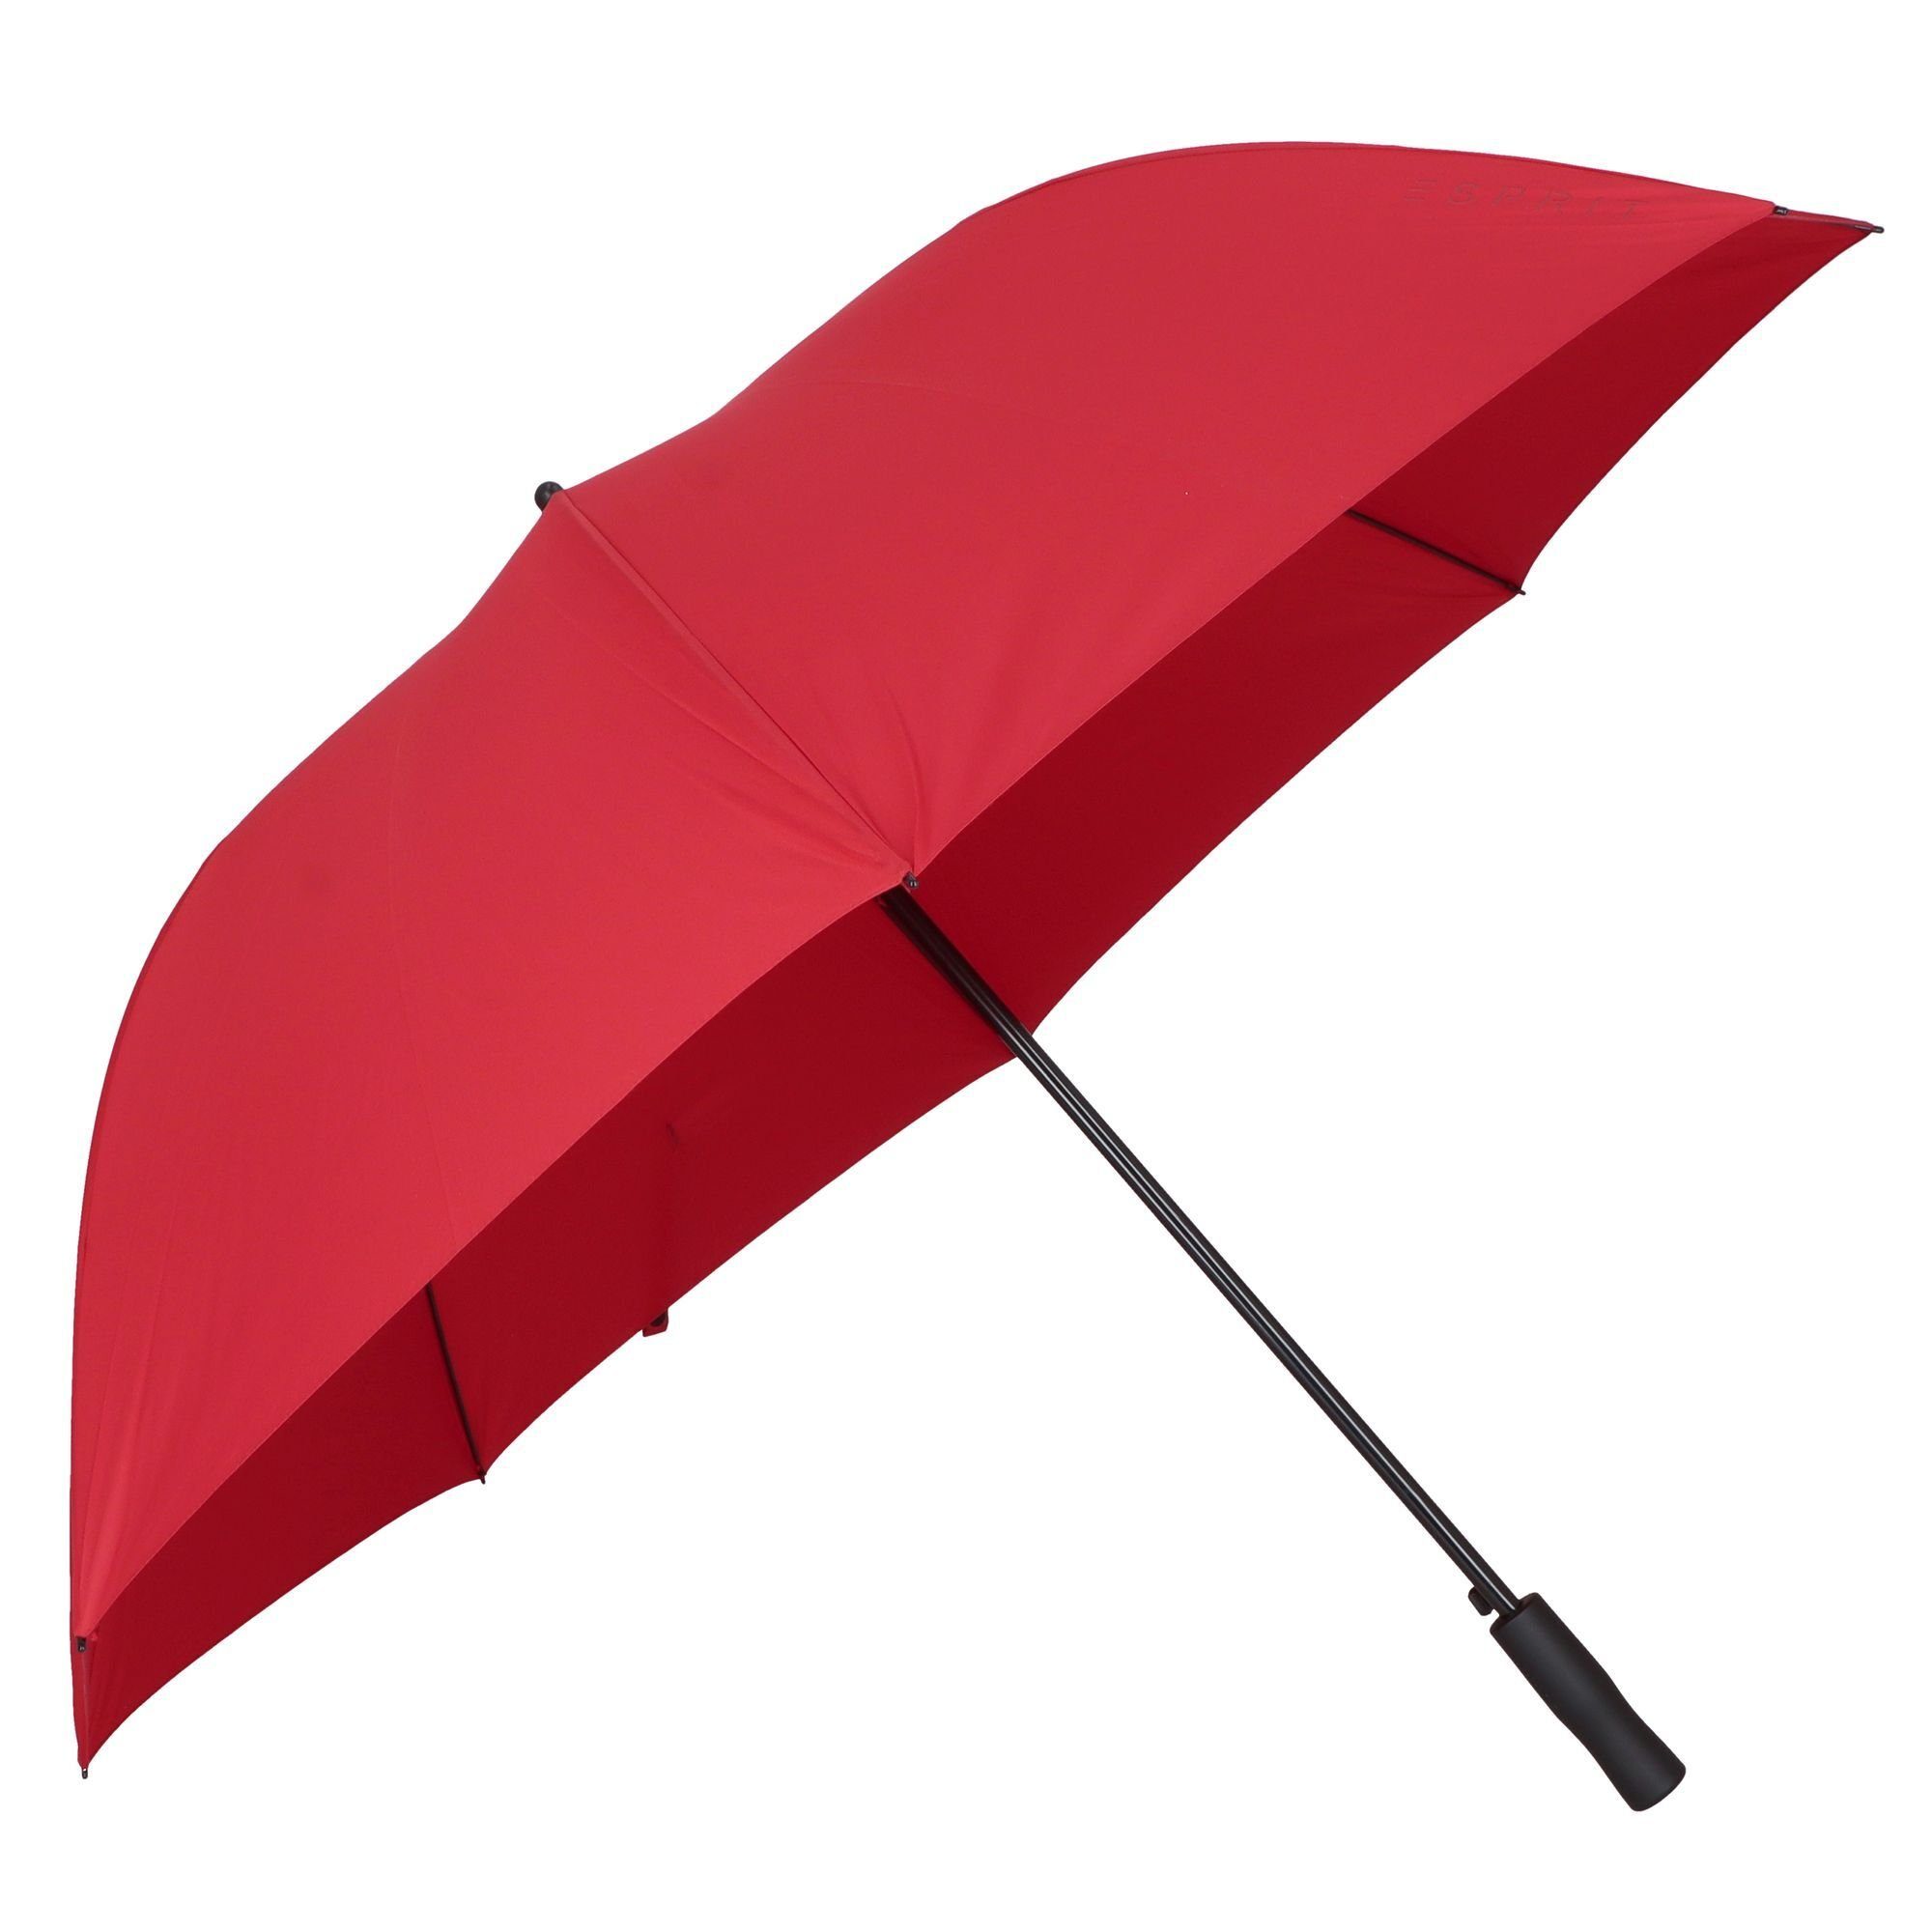 Tolles Angebot! Esprit Stockregenschirm, 117cm flag red